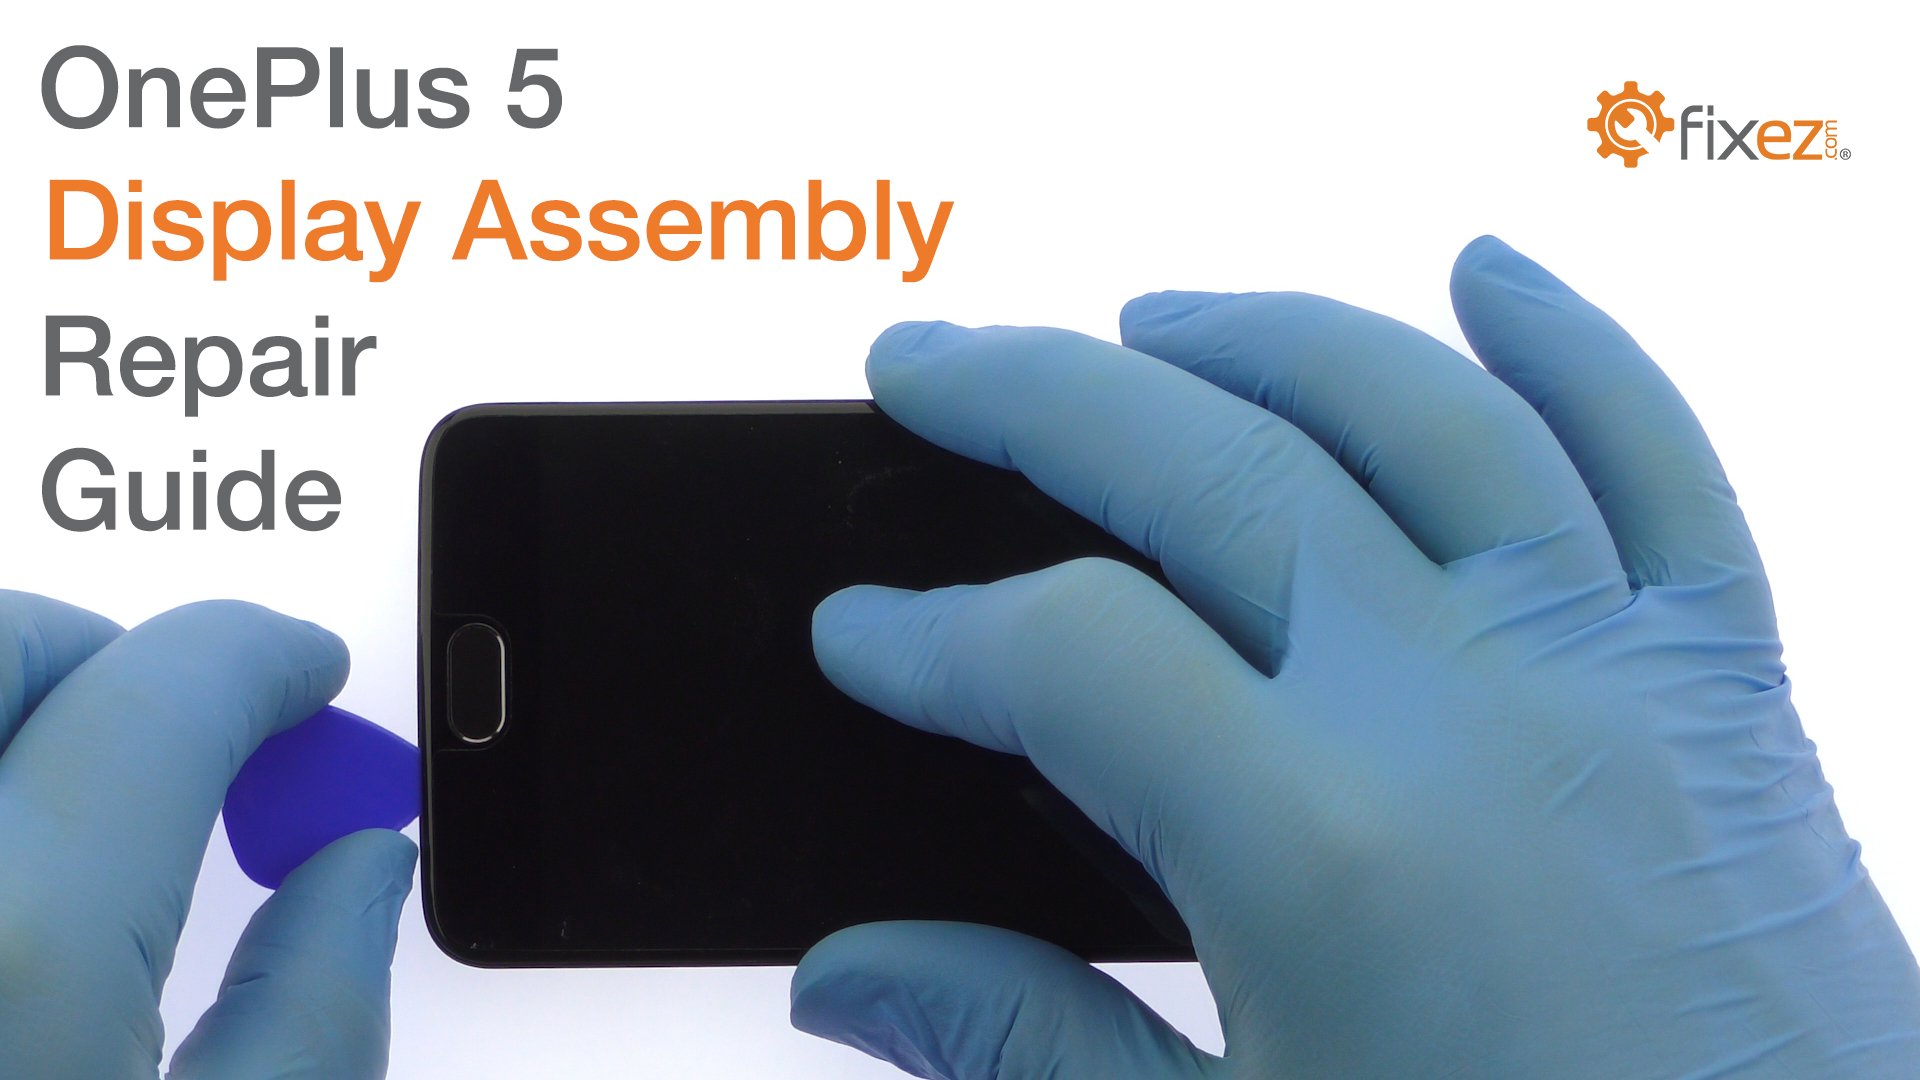 OnePlus 5 Display Assembly Repair